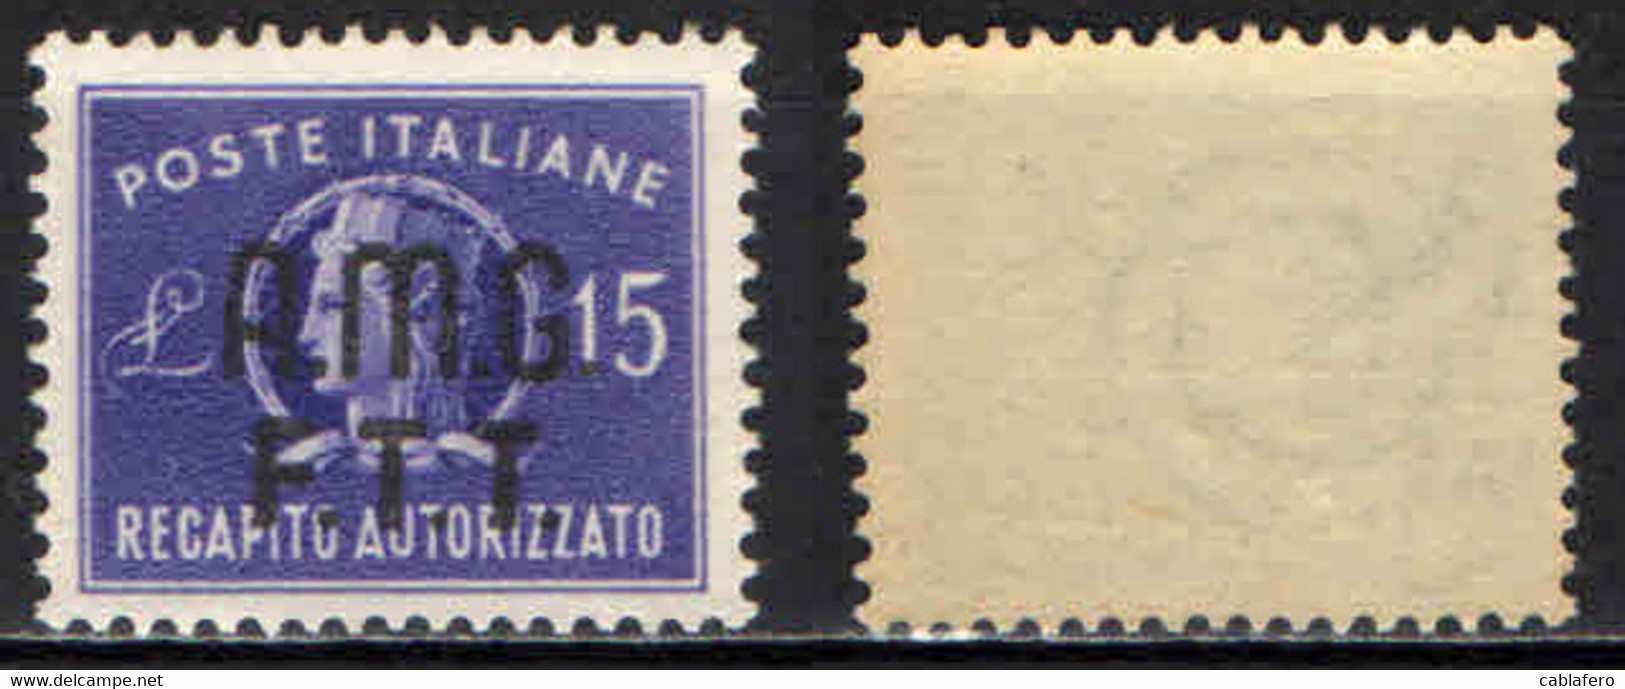 TRIESTE - AMGFTT - 1949 - 15 LIRE SOVRASTAMPA SU DUE RIGHE - MNH - Revenue Stamps